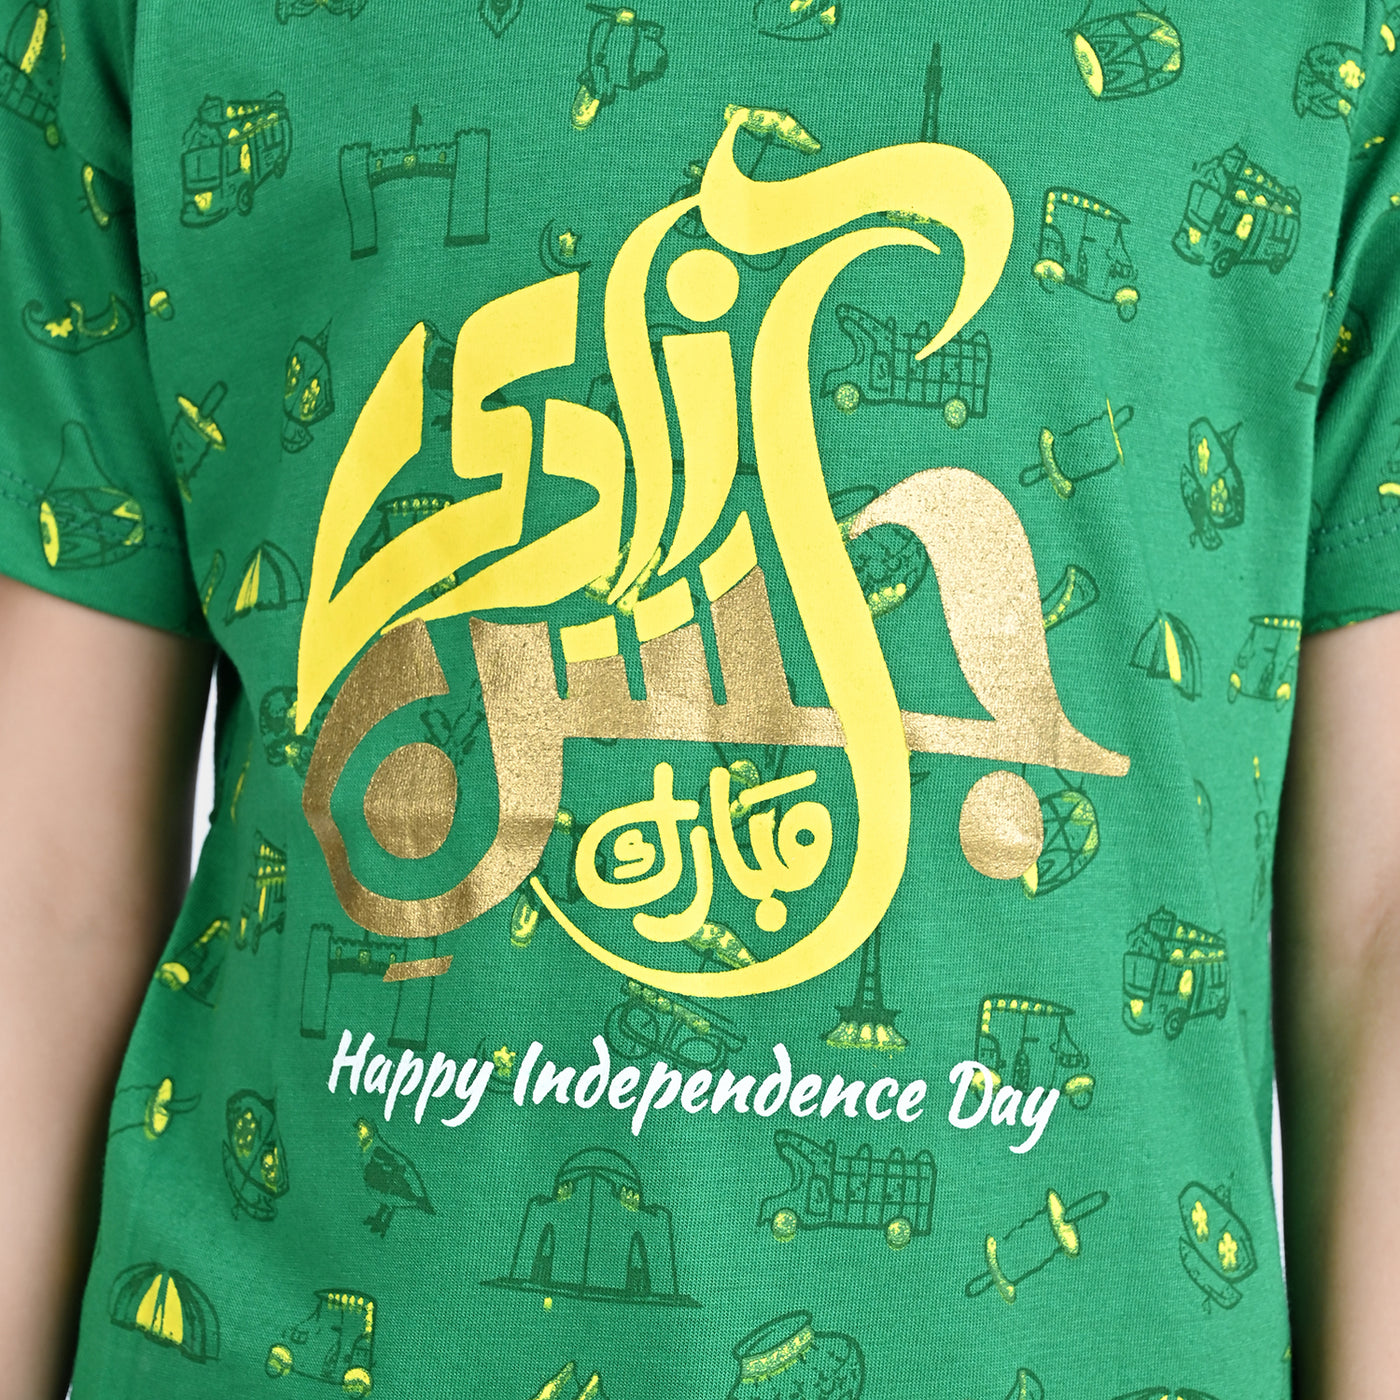 Girls PC Jersey T-Shirt H/S Azadi-Fern Green